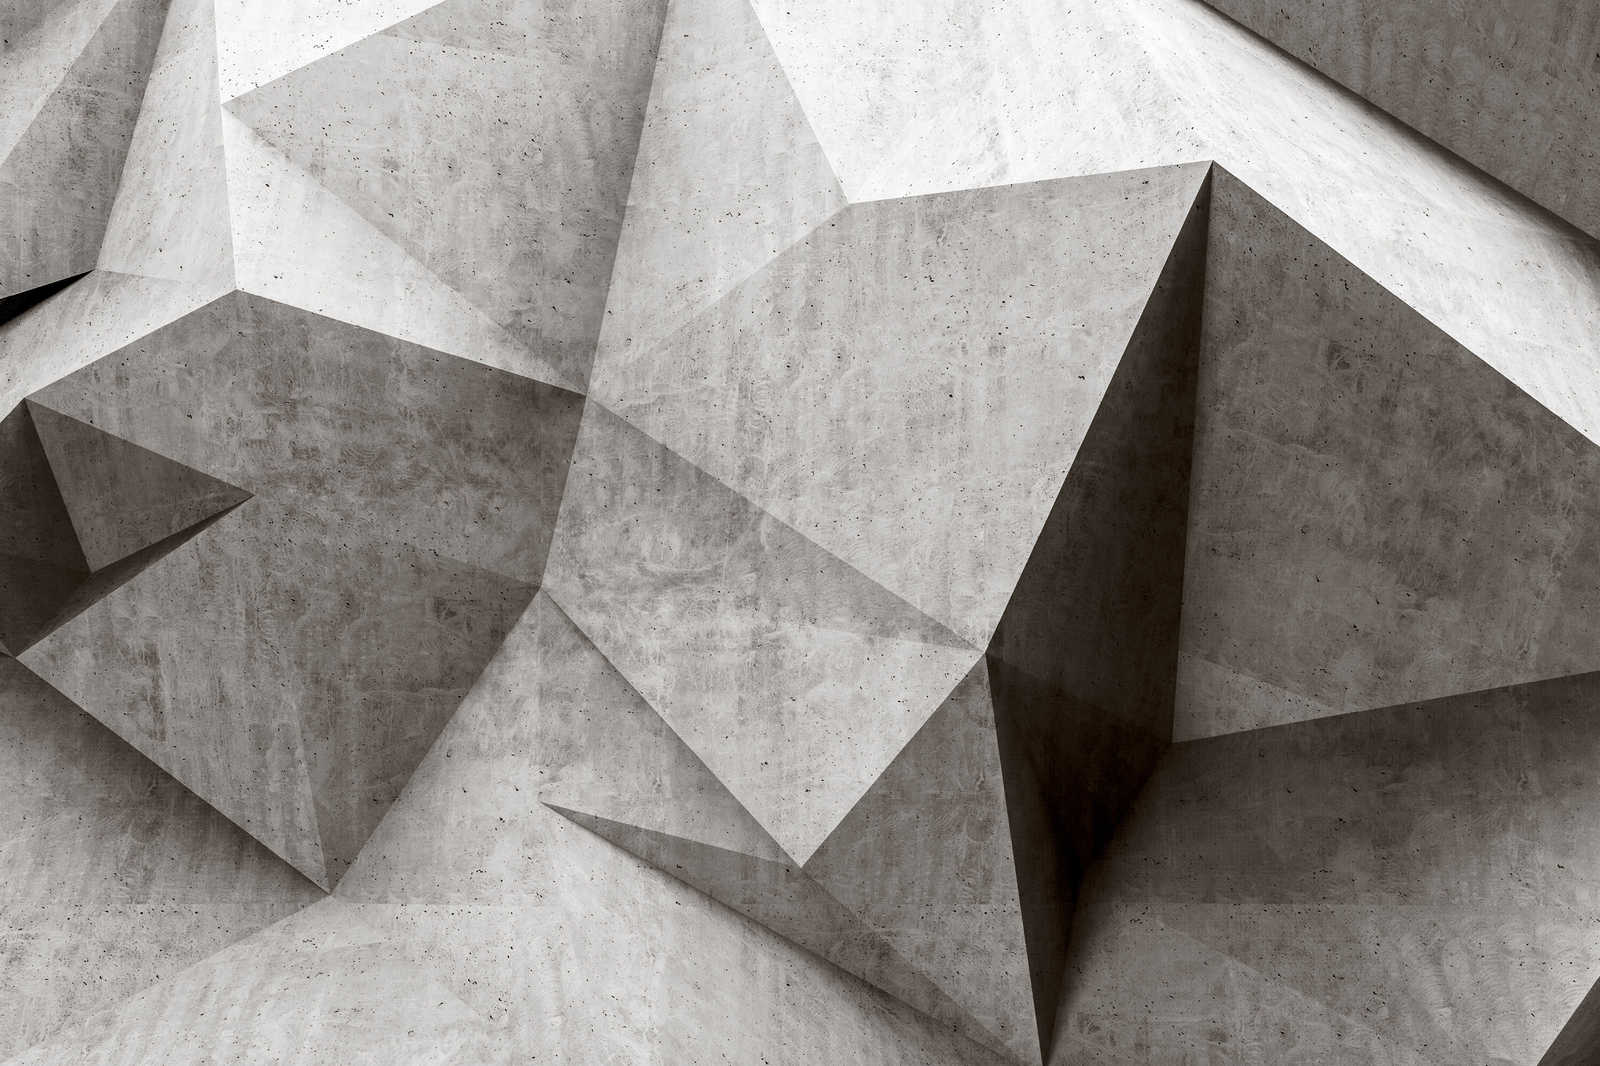             Boulder 1 - Cool 3D Beton Polygonen Canvas Schilderij - 0.90 m x 0.60 m
        